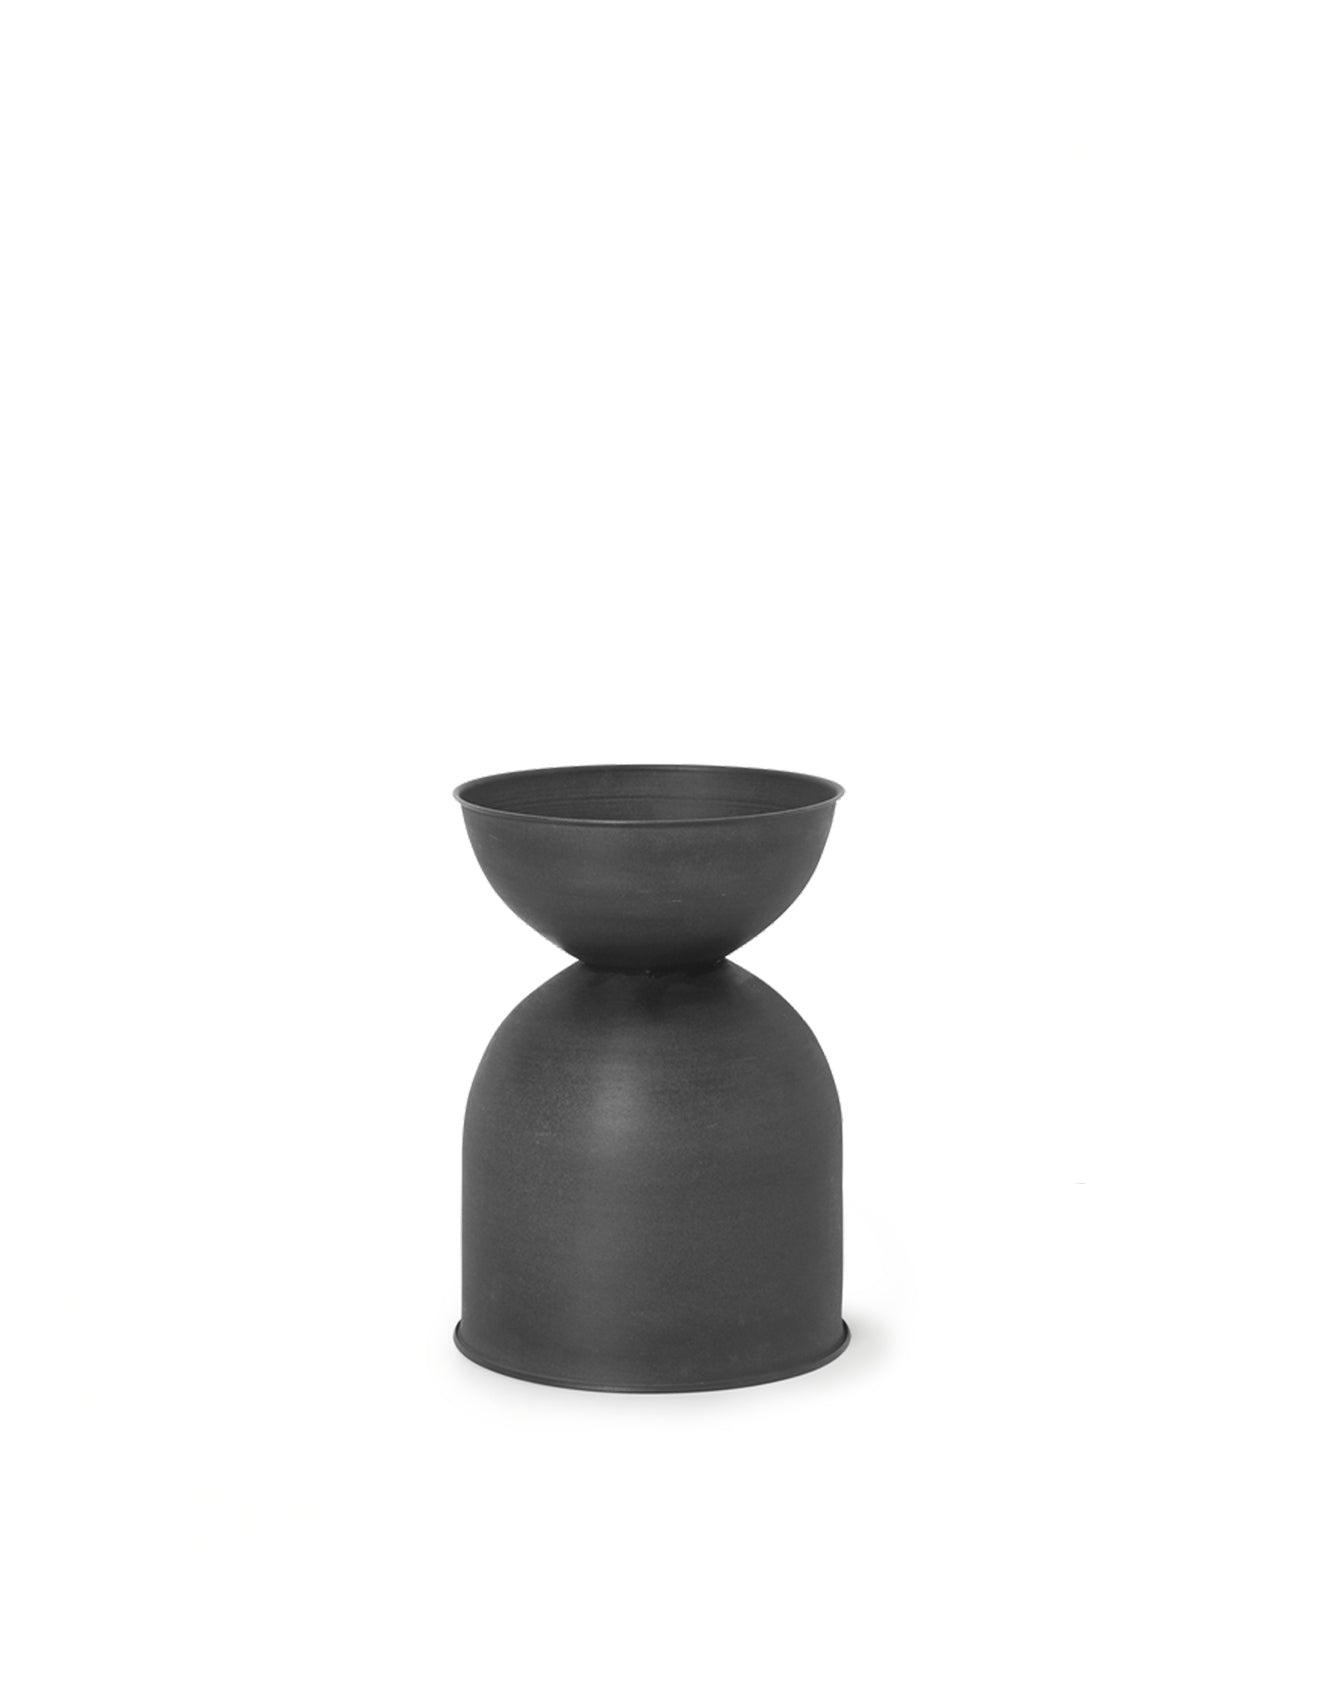 Ferm Living Hourglass Pot - Black Small